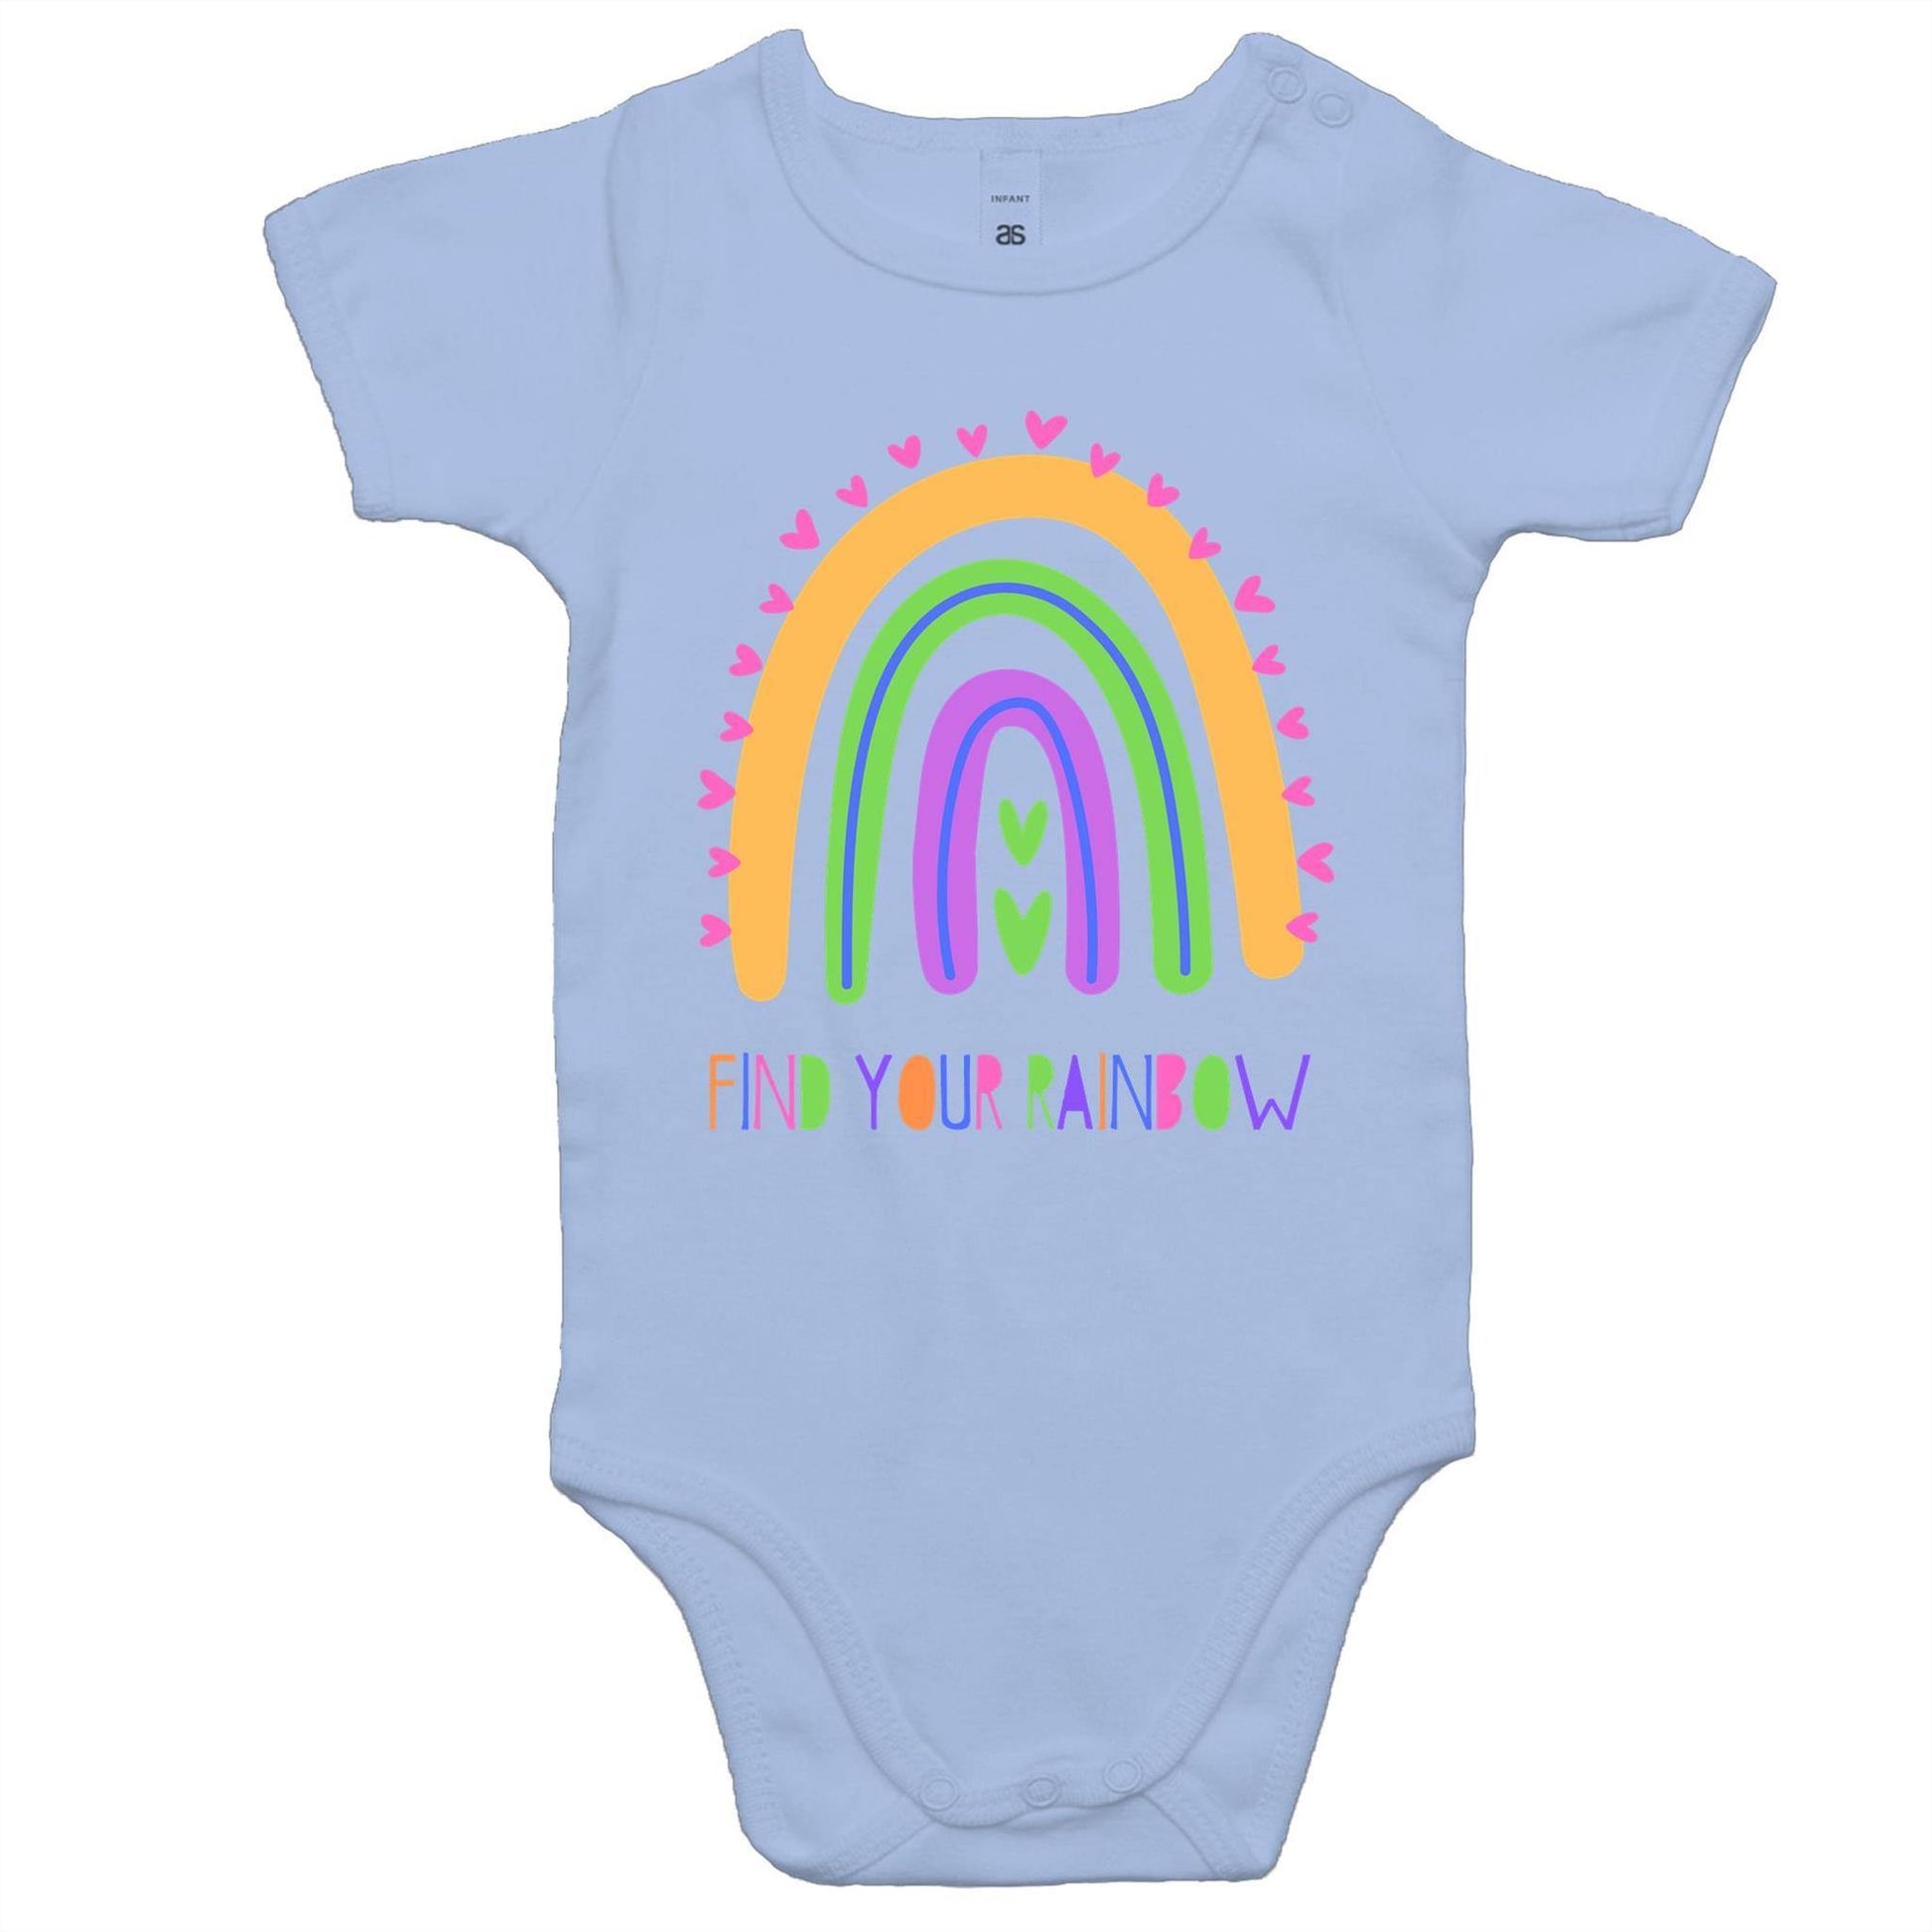 Find Your Rainbow - Baby Bodysuit Powder Blue Baby Bodysuit kids